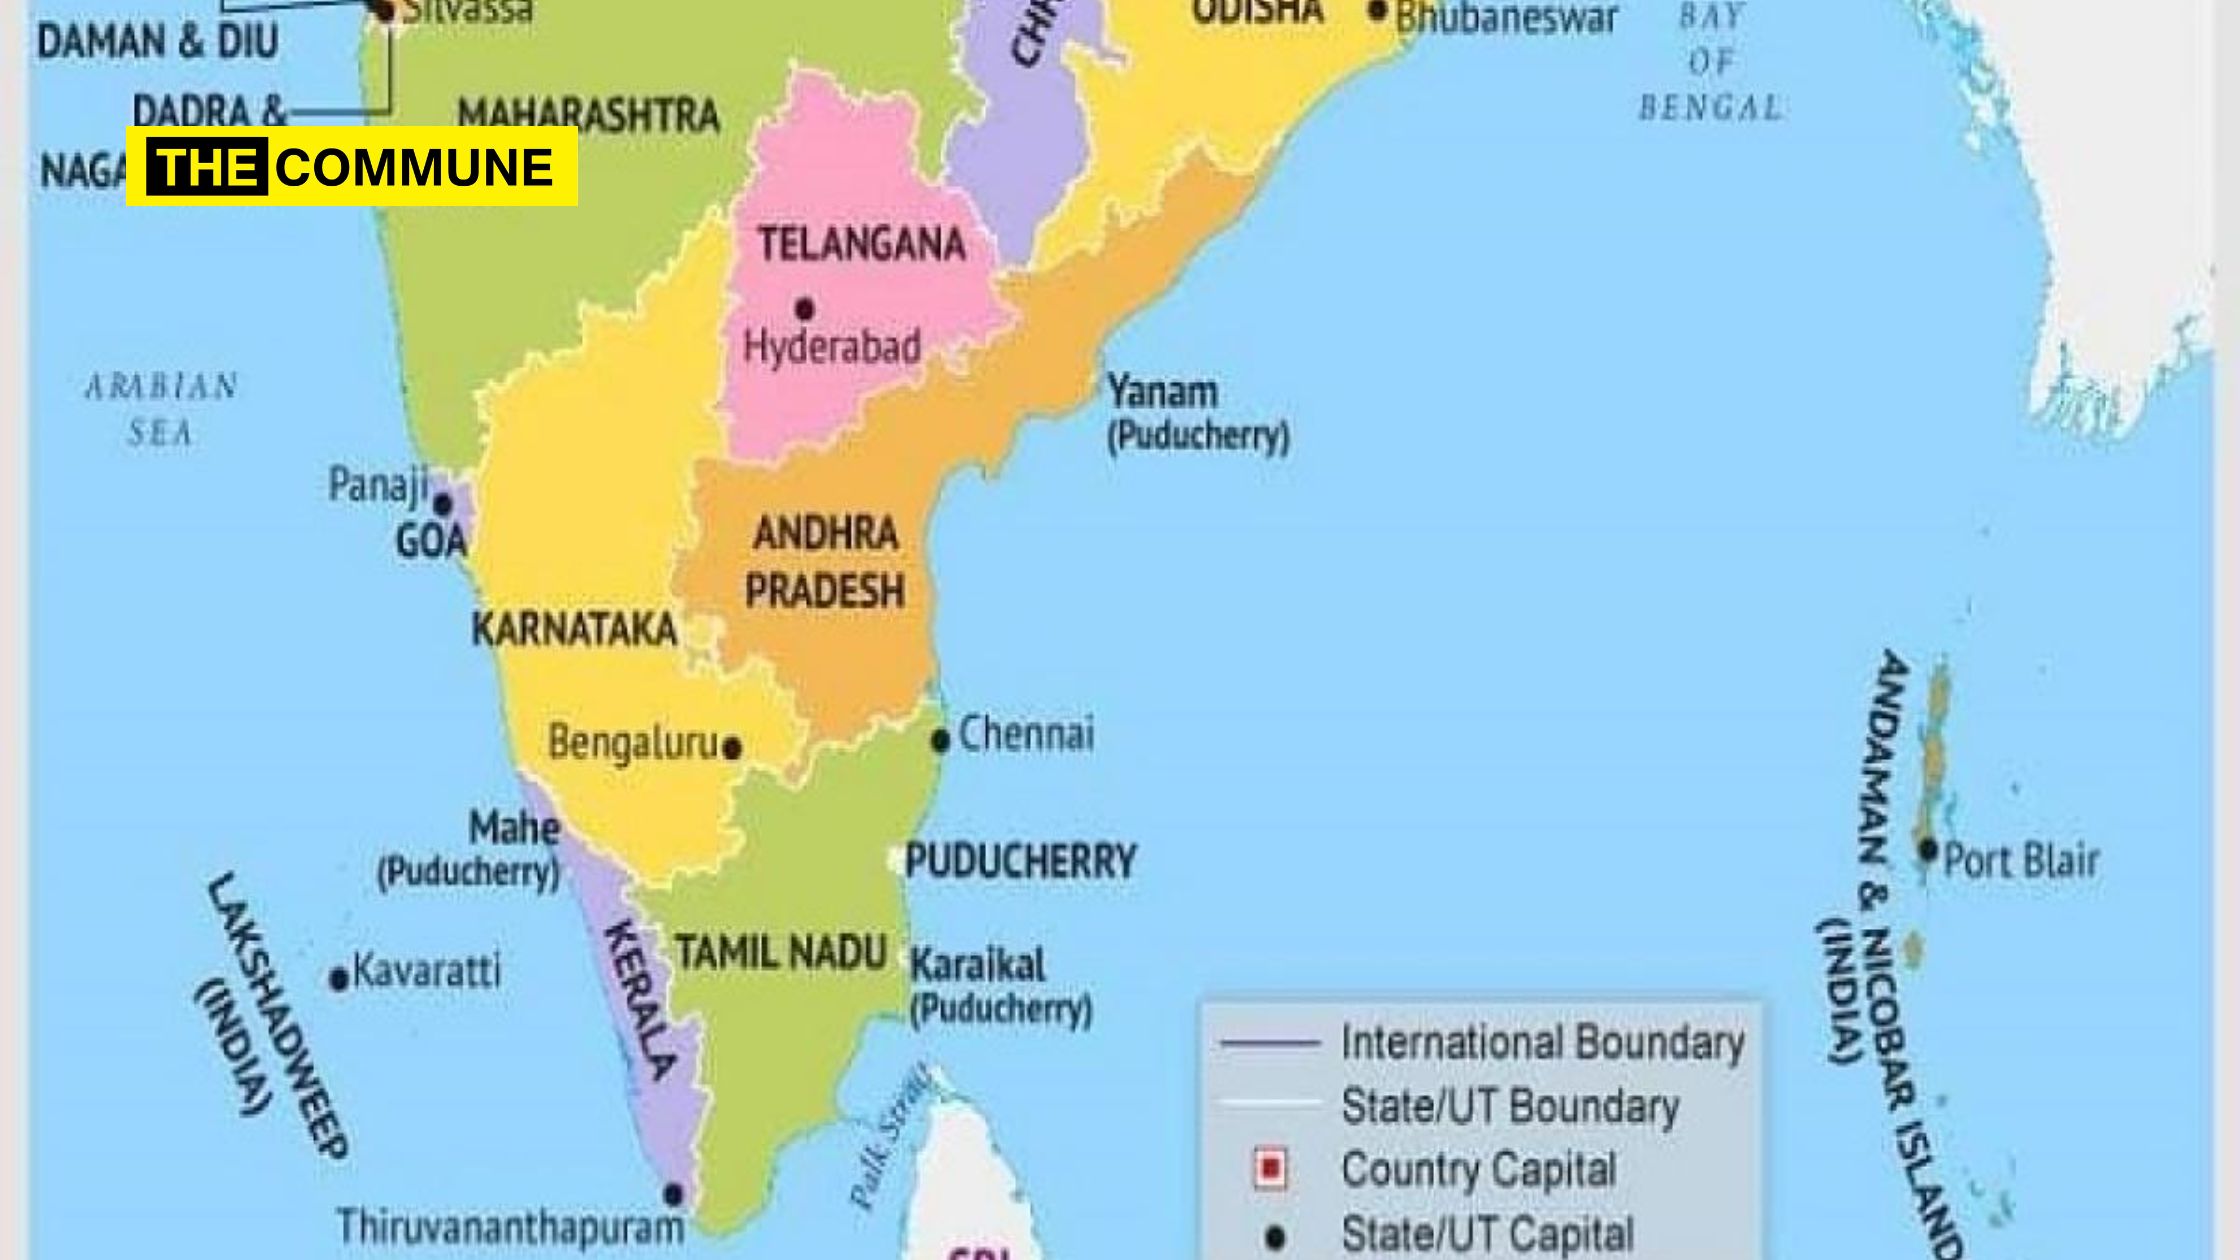 Indian states and their capitals Andhra Pradesh capital may be amrawati or  vishakapatnam some confusions here…. - General knowledge - Quora